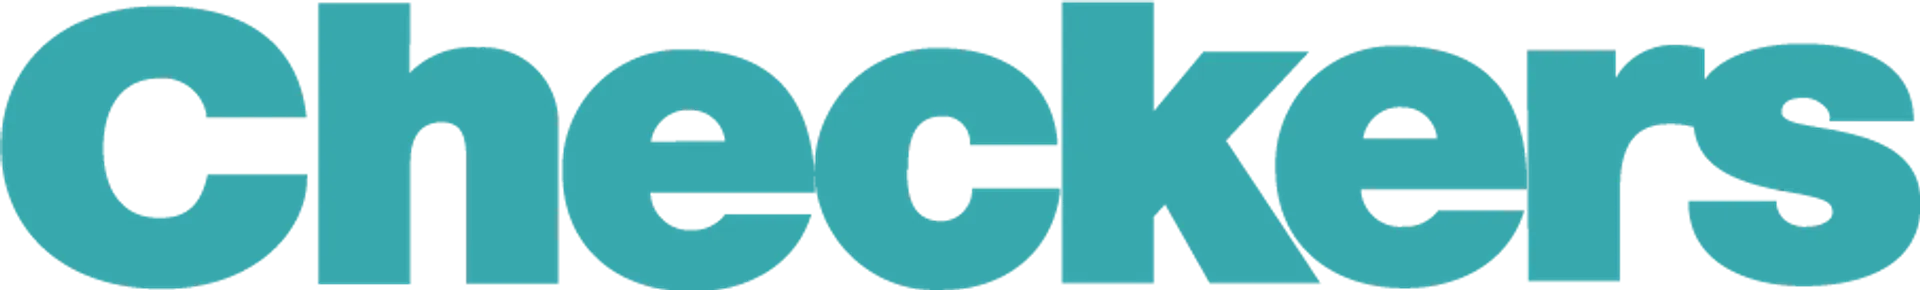 CHECKERS logo